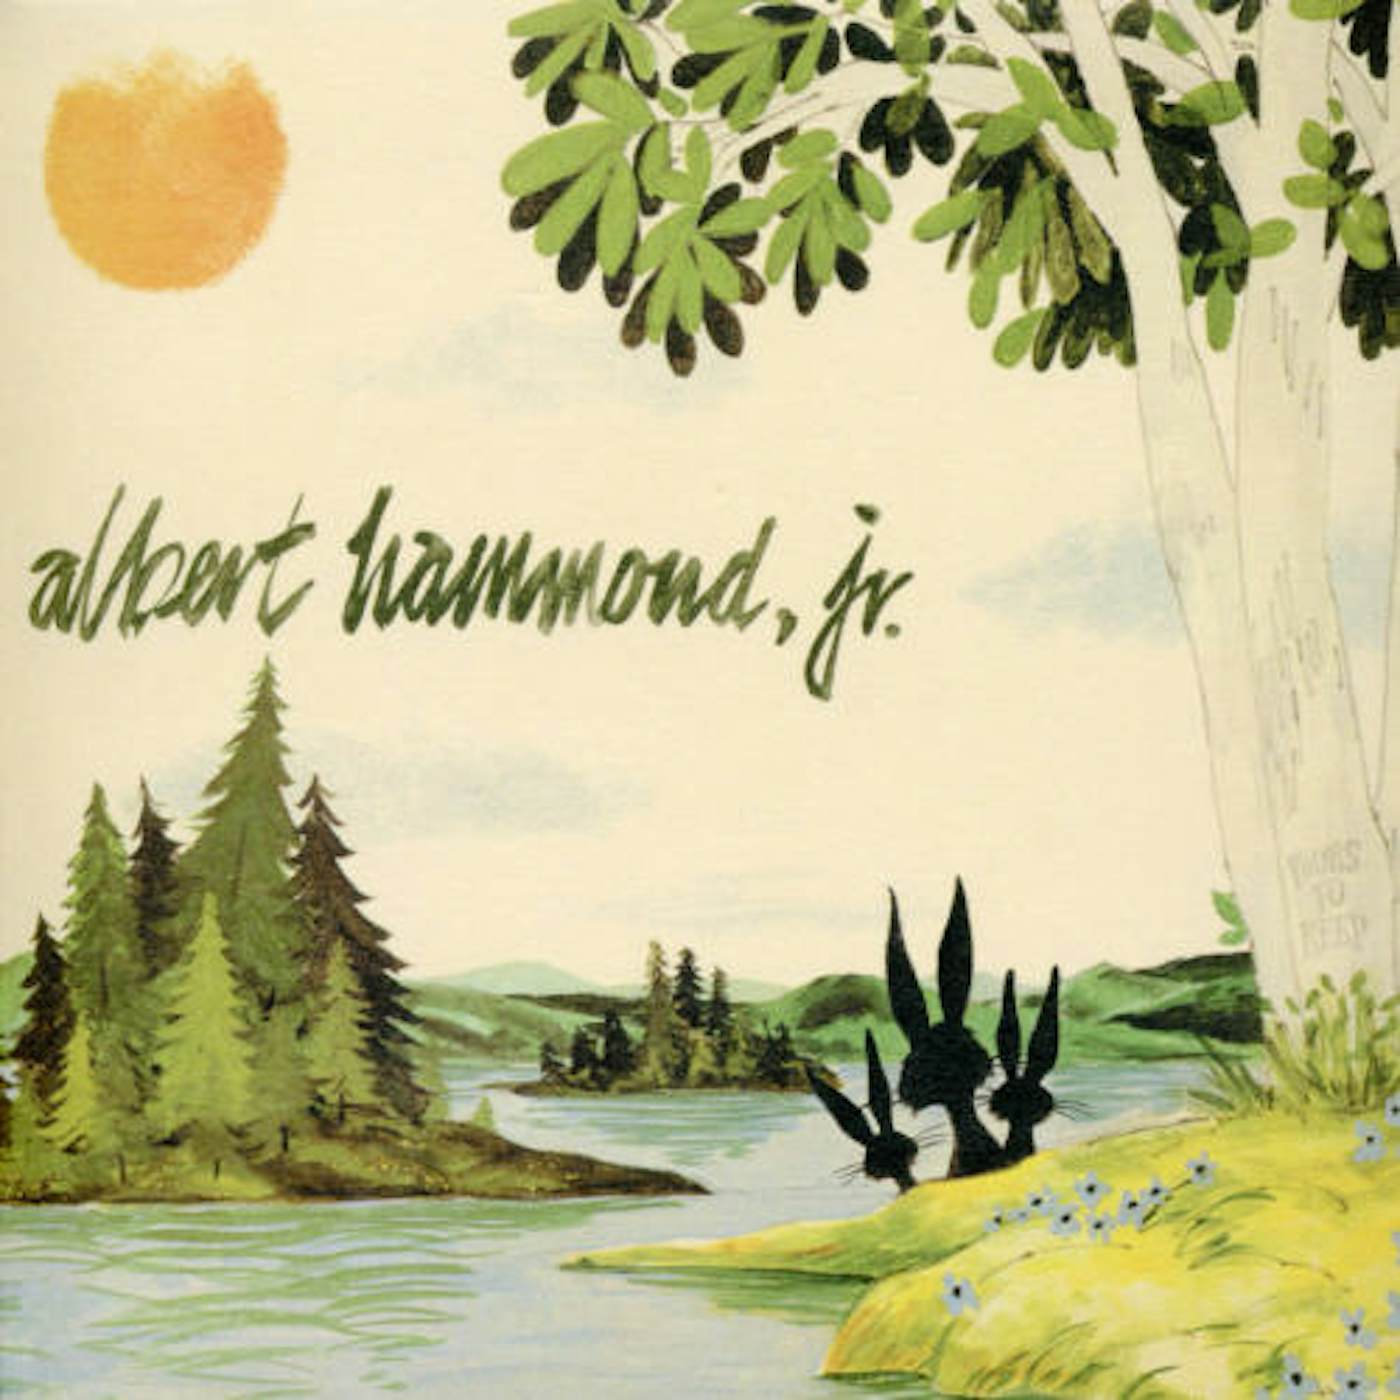 Albert Hammond YOURS TO KEEP CD